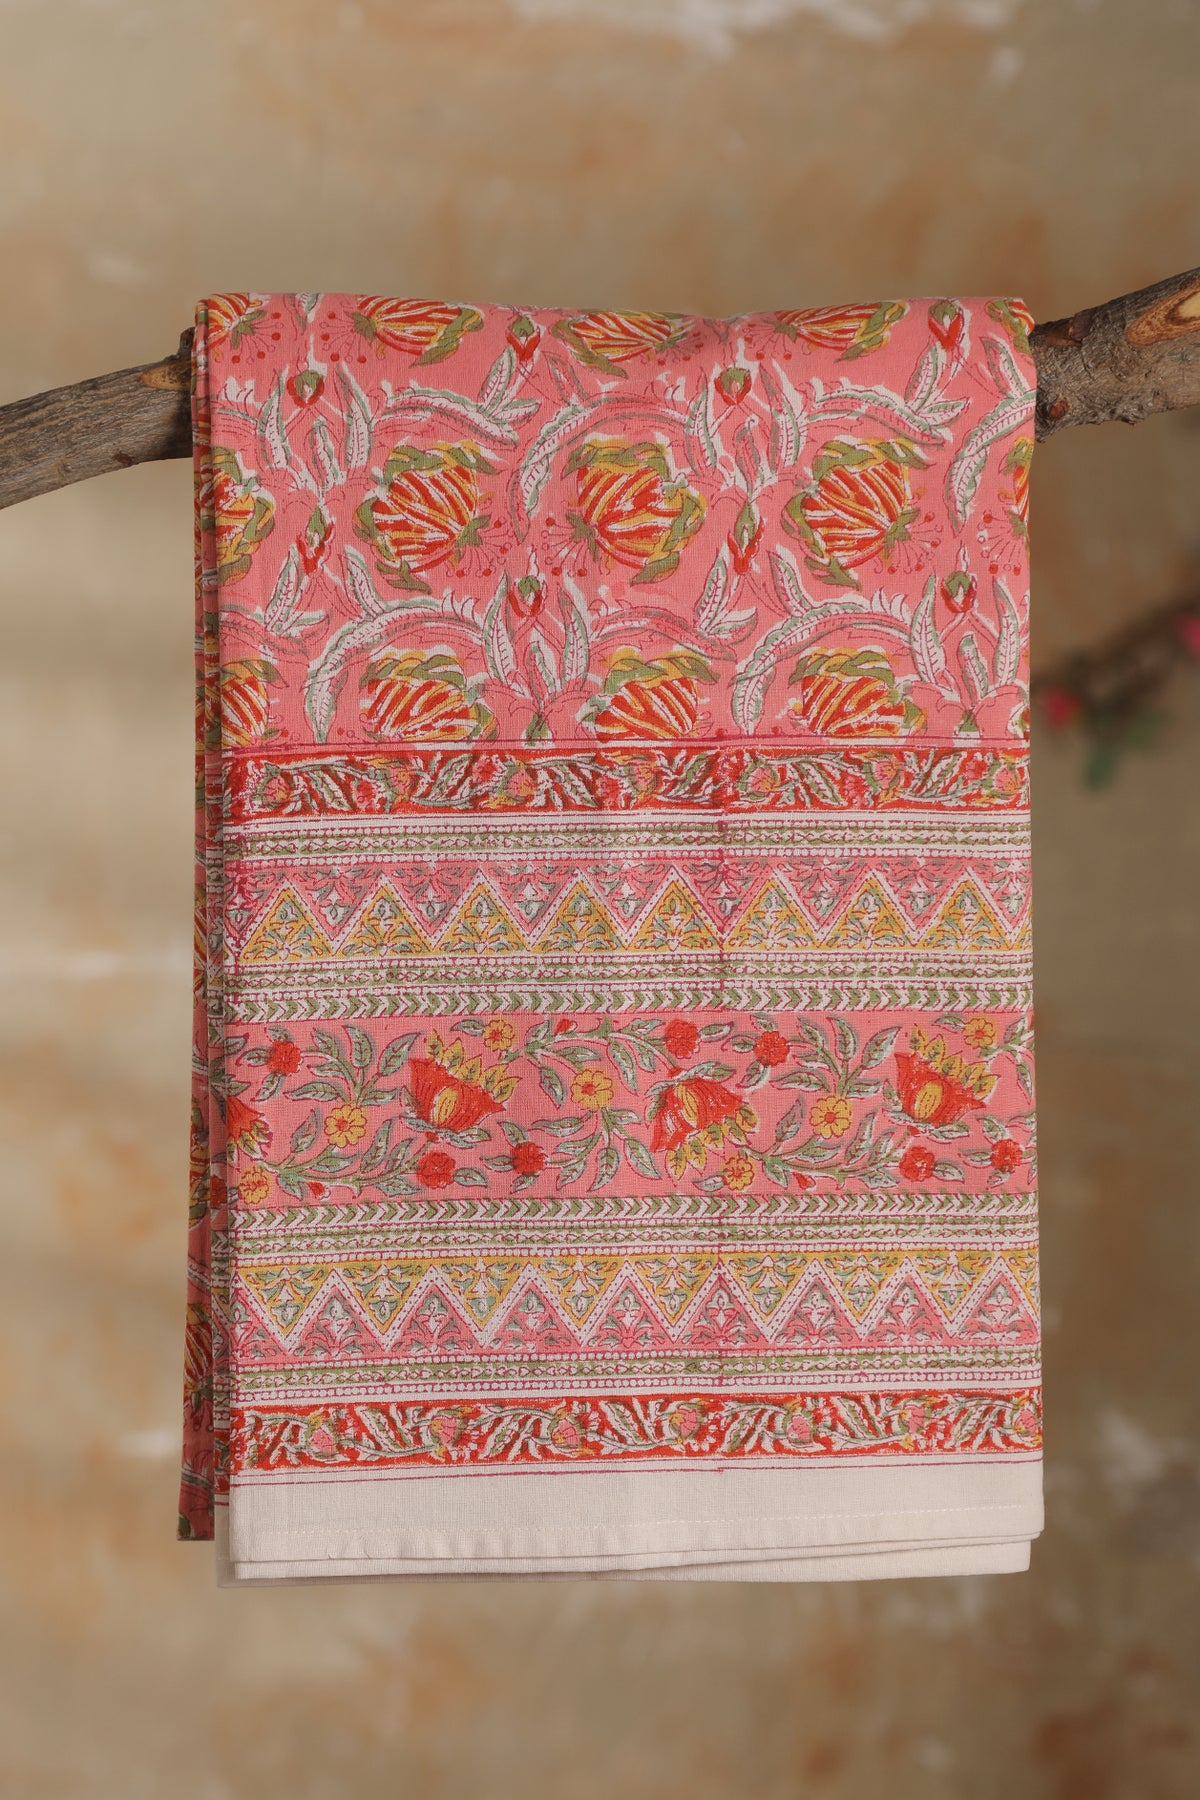 Floral Design Jaipur Print Peach Pink Single Cotton Bedspread